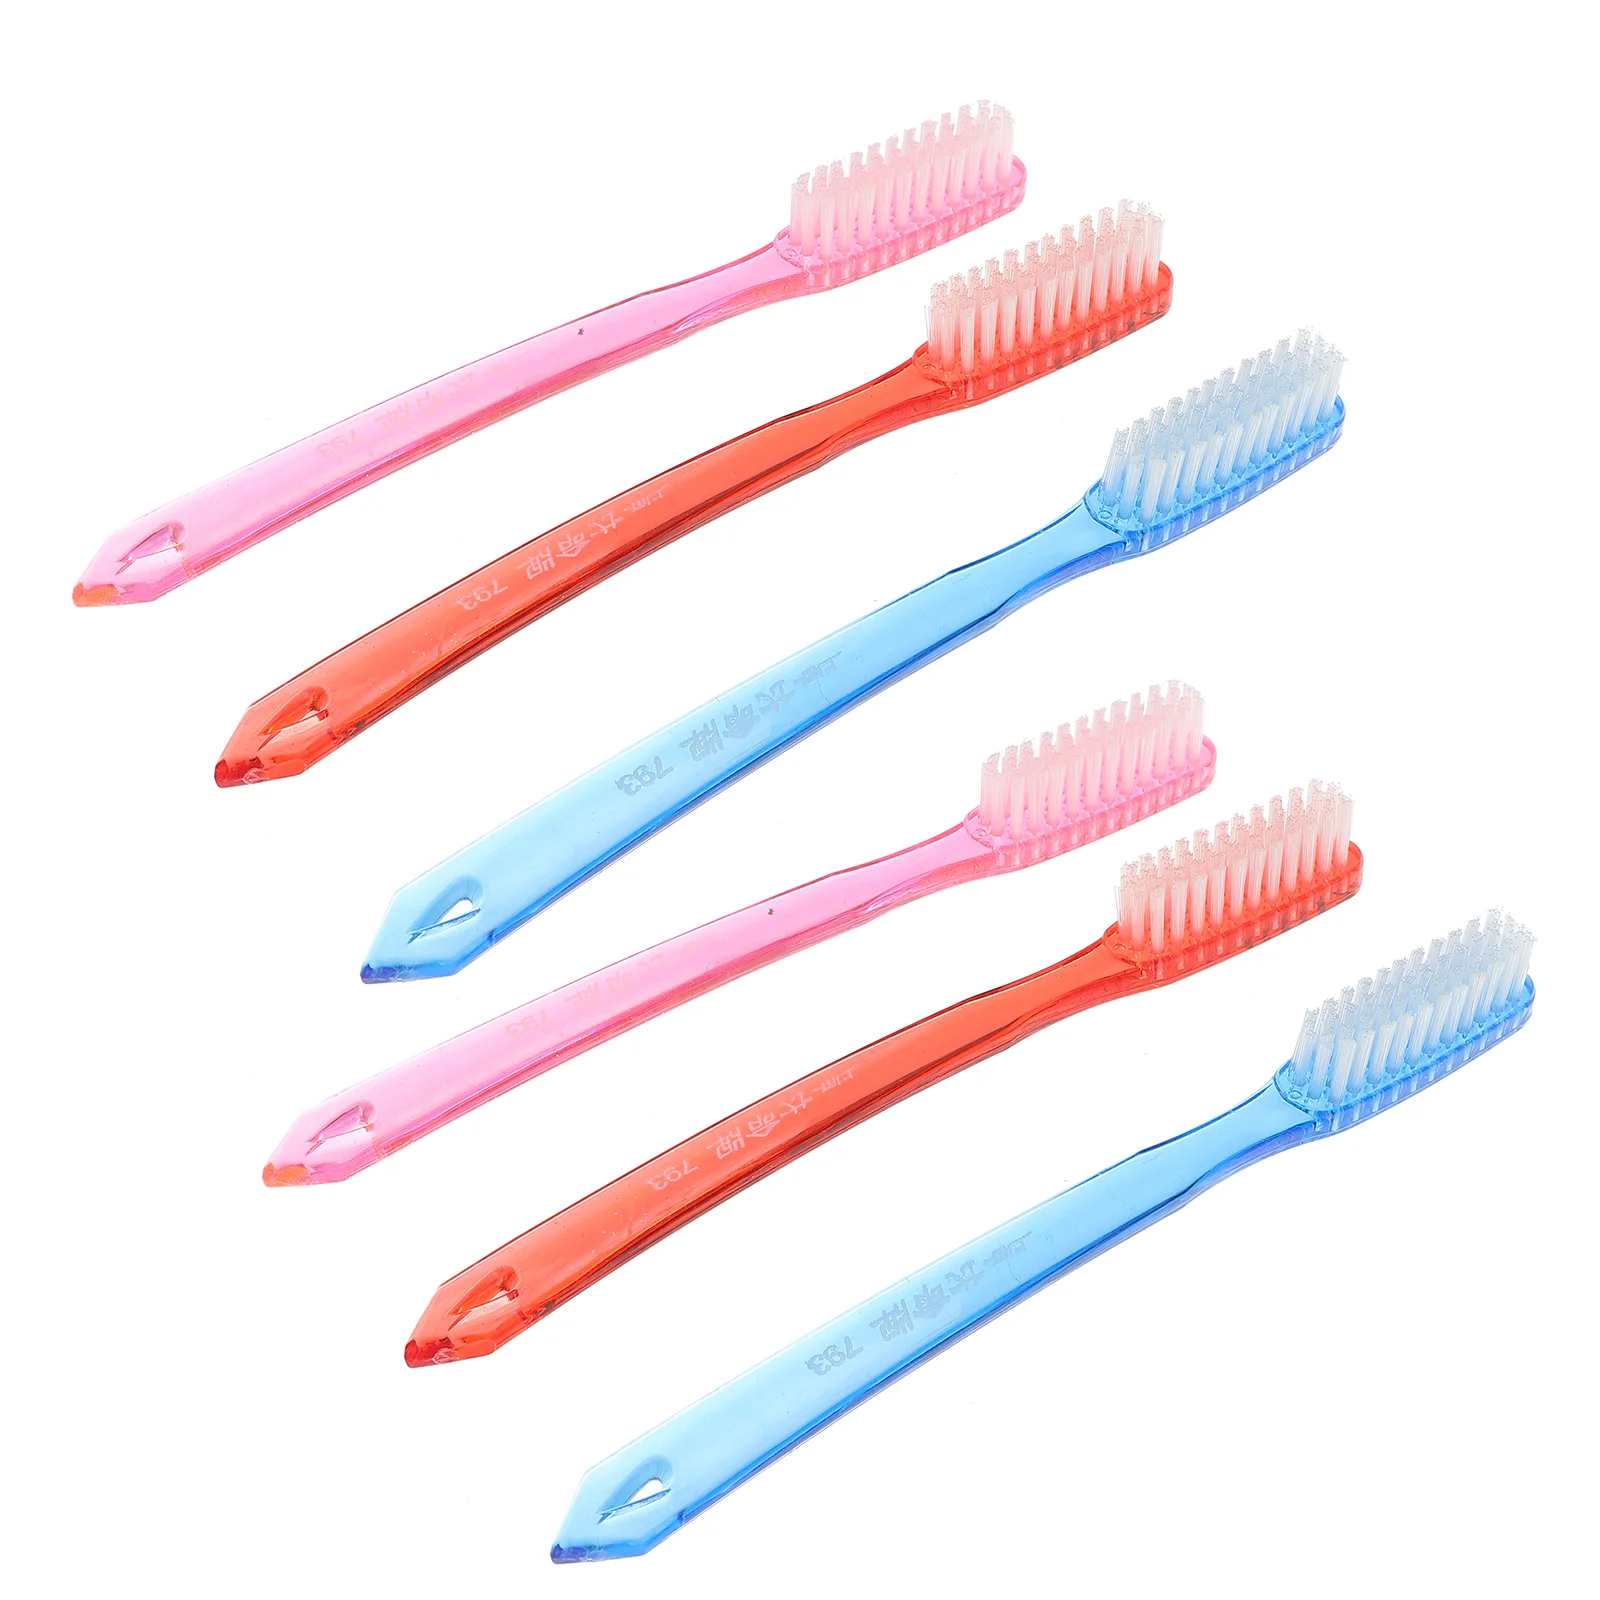 Head Adultsbrush Teeth Oral Adult Bristlesuperextra Reach To